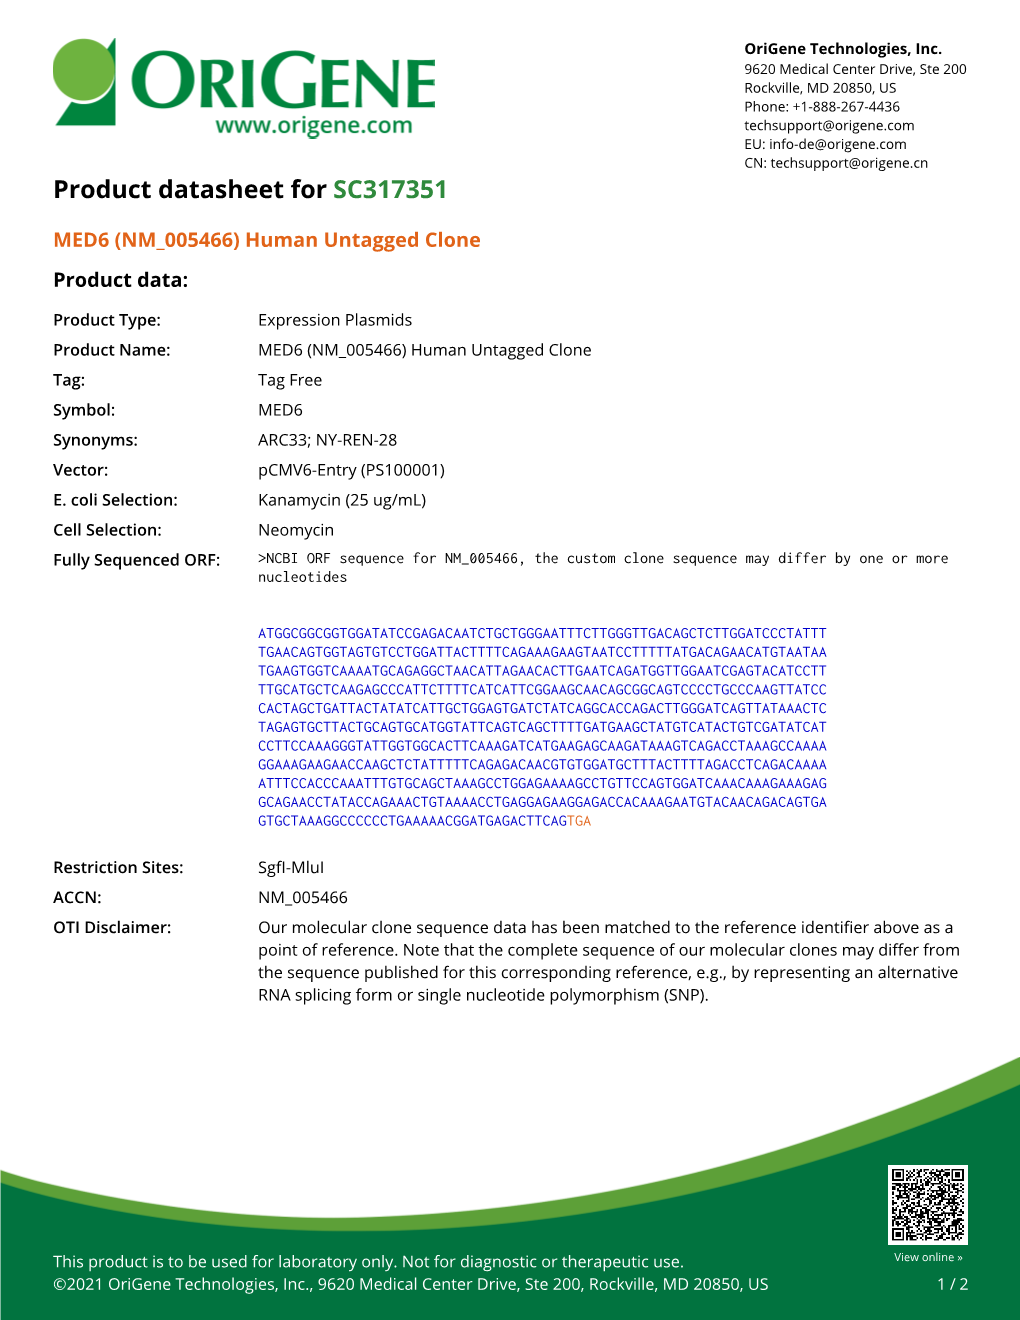 MED6 (NM 005466) Human Untagged Clone – SC317351 | Origene